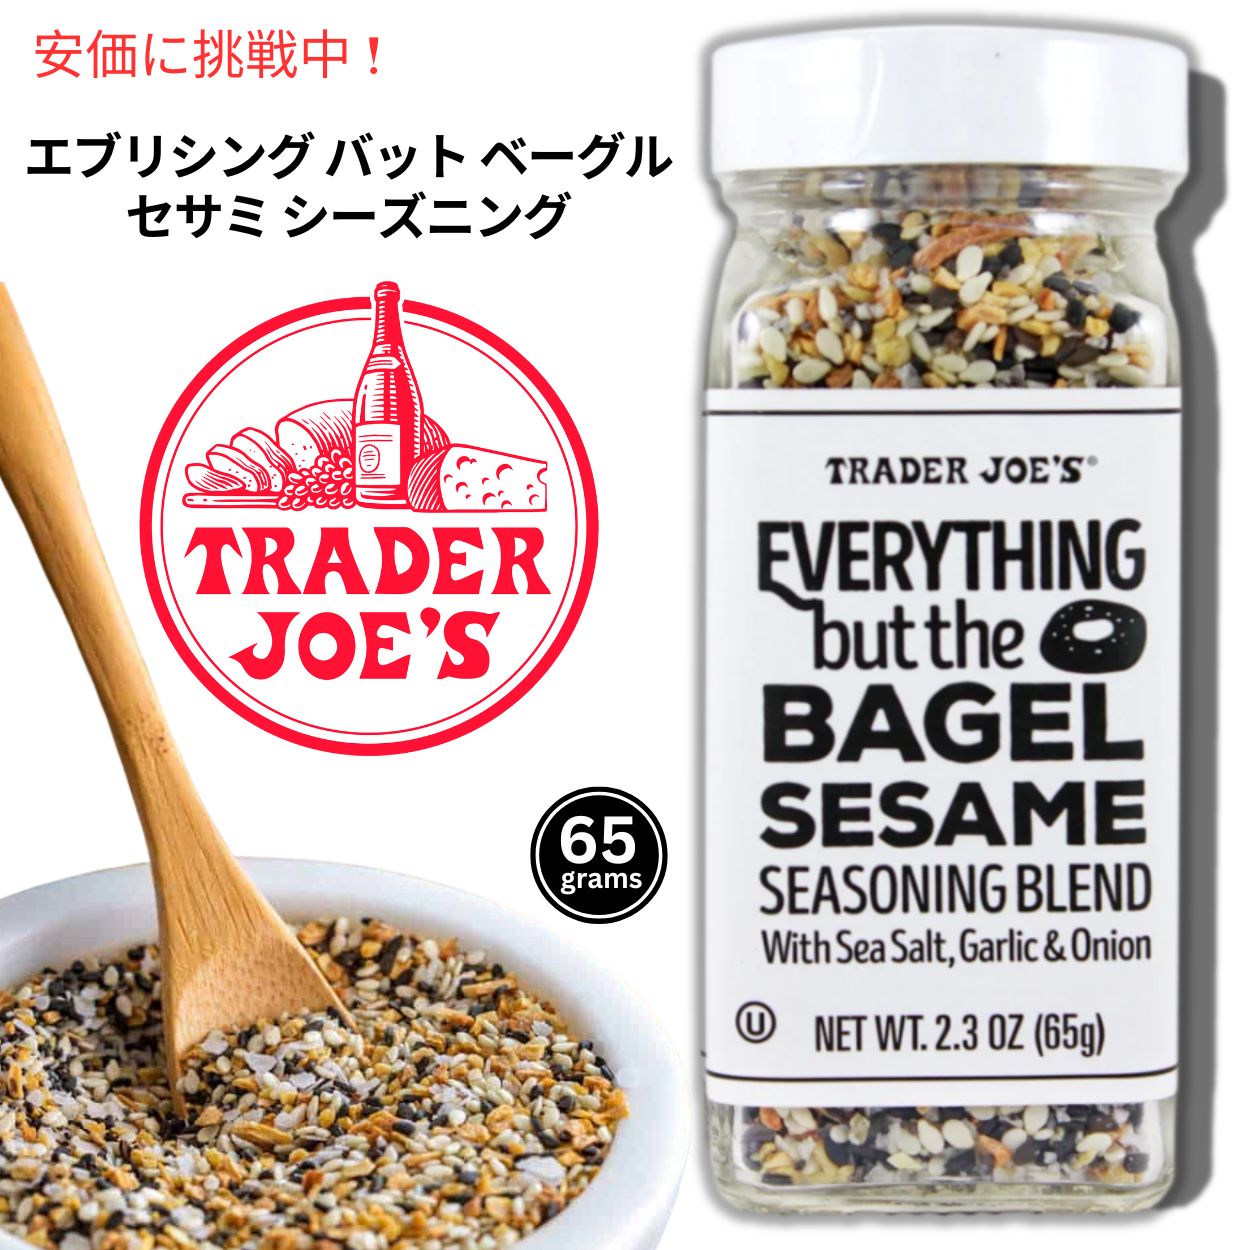 Trader Joe's トレーダージョーズ エブリシング バット ベーグル セサミ シーズニング 65g Everything but the Bagel Sesame Seasoning 調味料